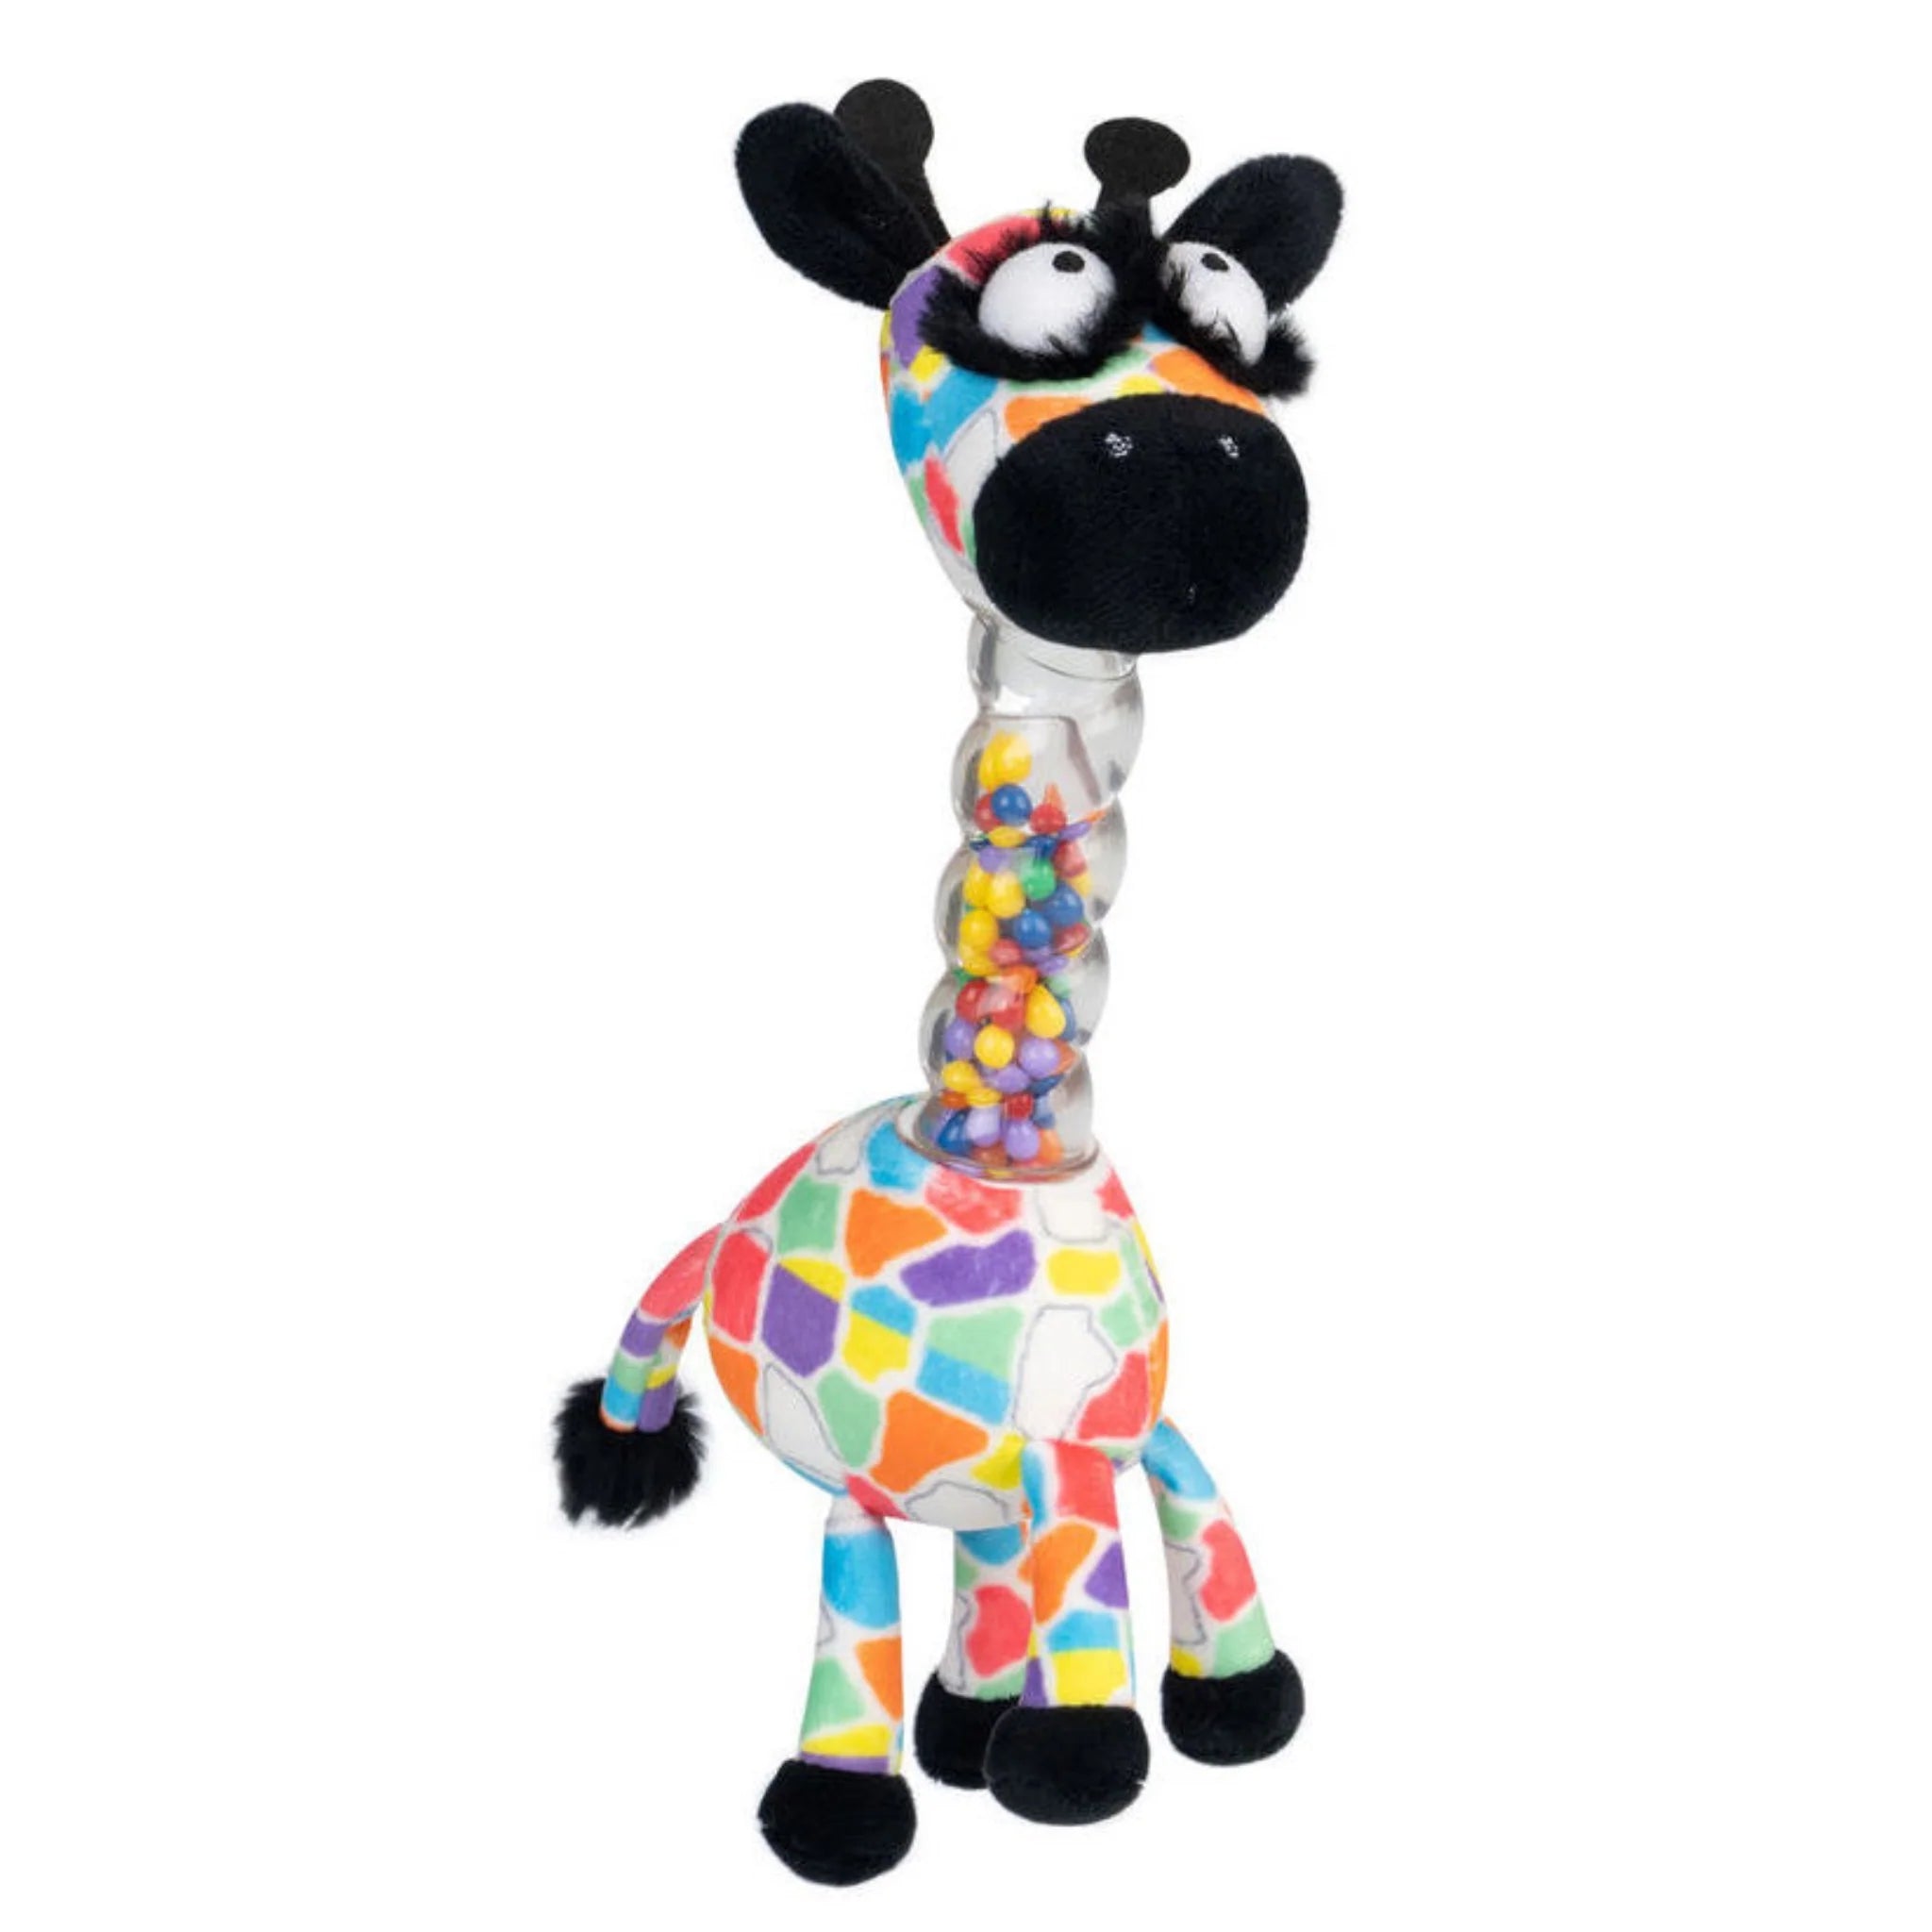 Jaffy the Fringe Footed Giraffe Hand Rattle Jingle Jangle Activity Toy - Twinkle Twinkle Little One